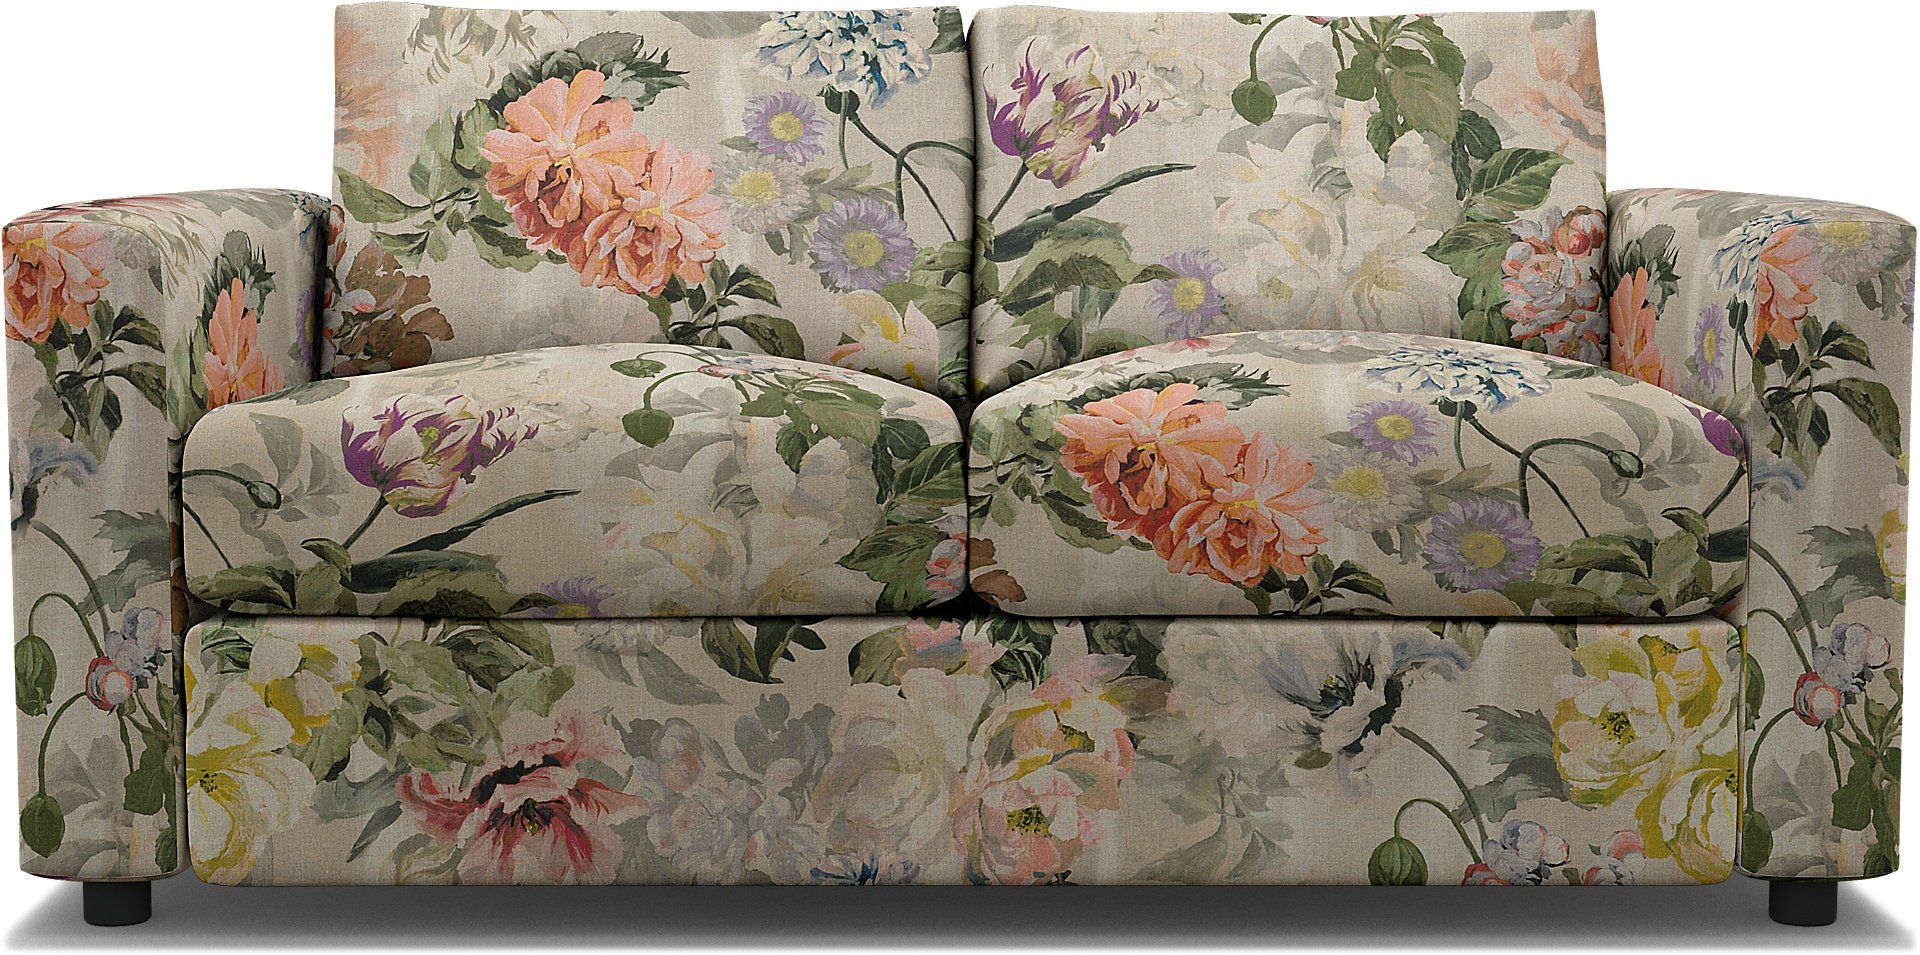 IKEA - Vimle 2 Seater Sofa Bed Cover, Delft Flower - Tuberose, Linen - Bemz